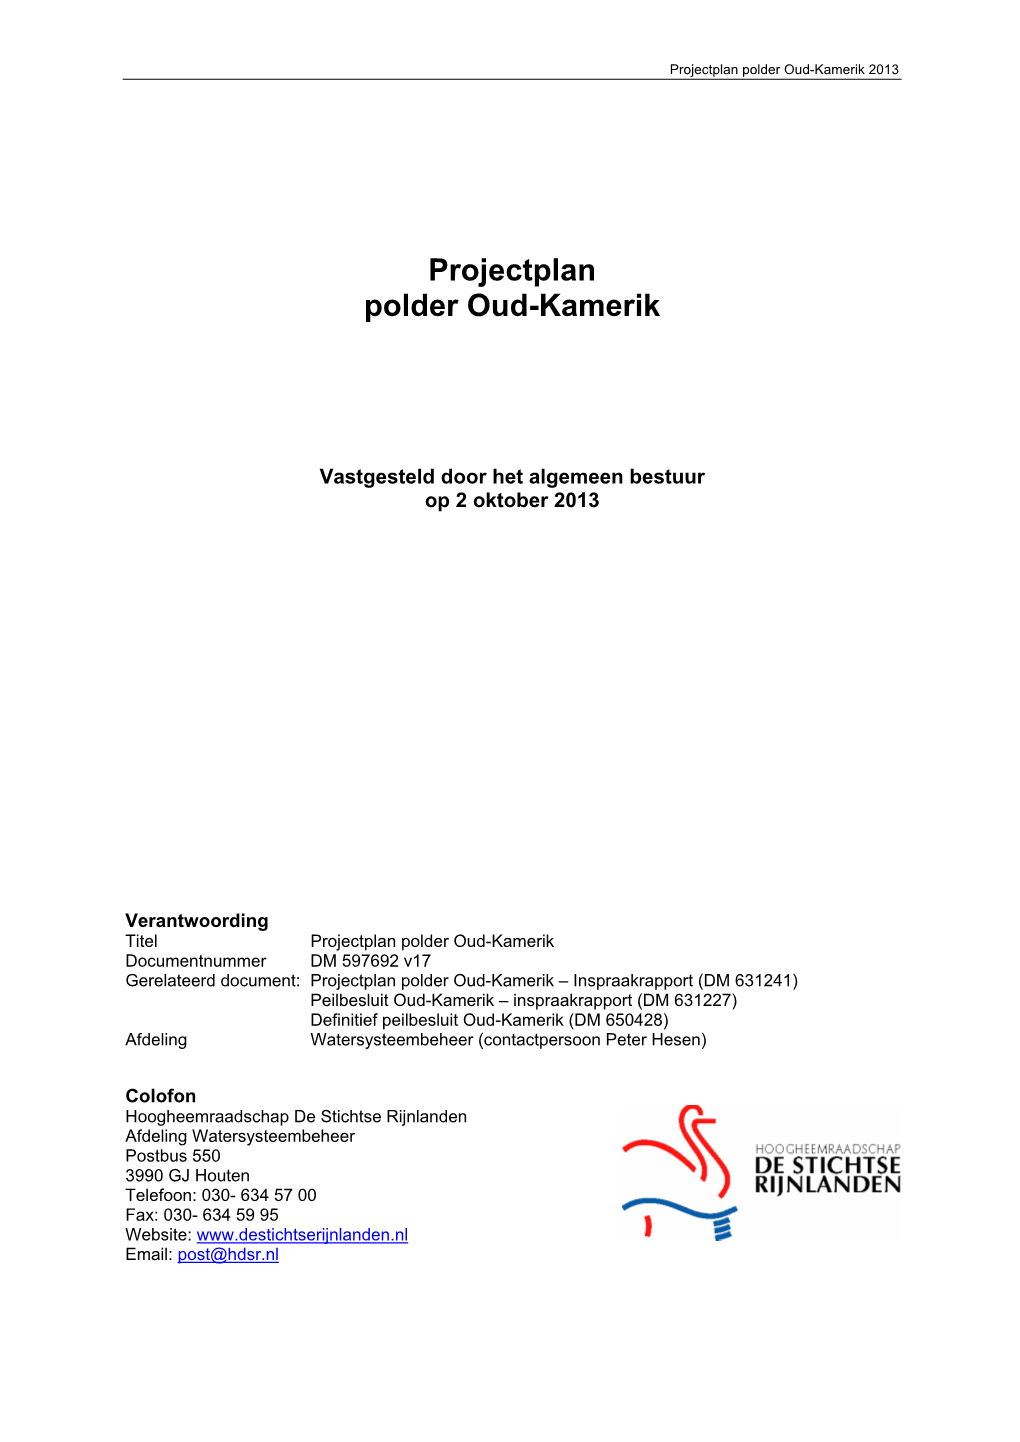 Projectplan Polder Oud-Kamerik 2013